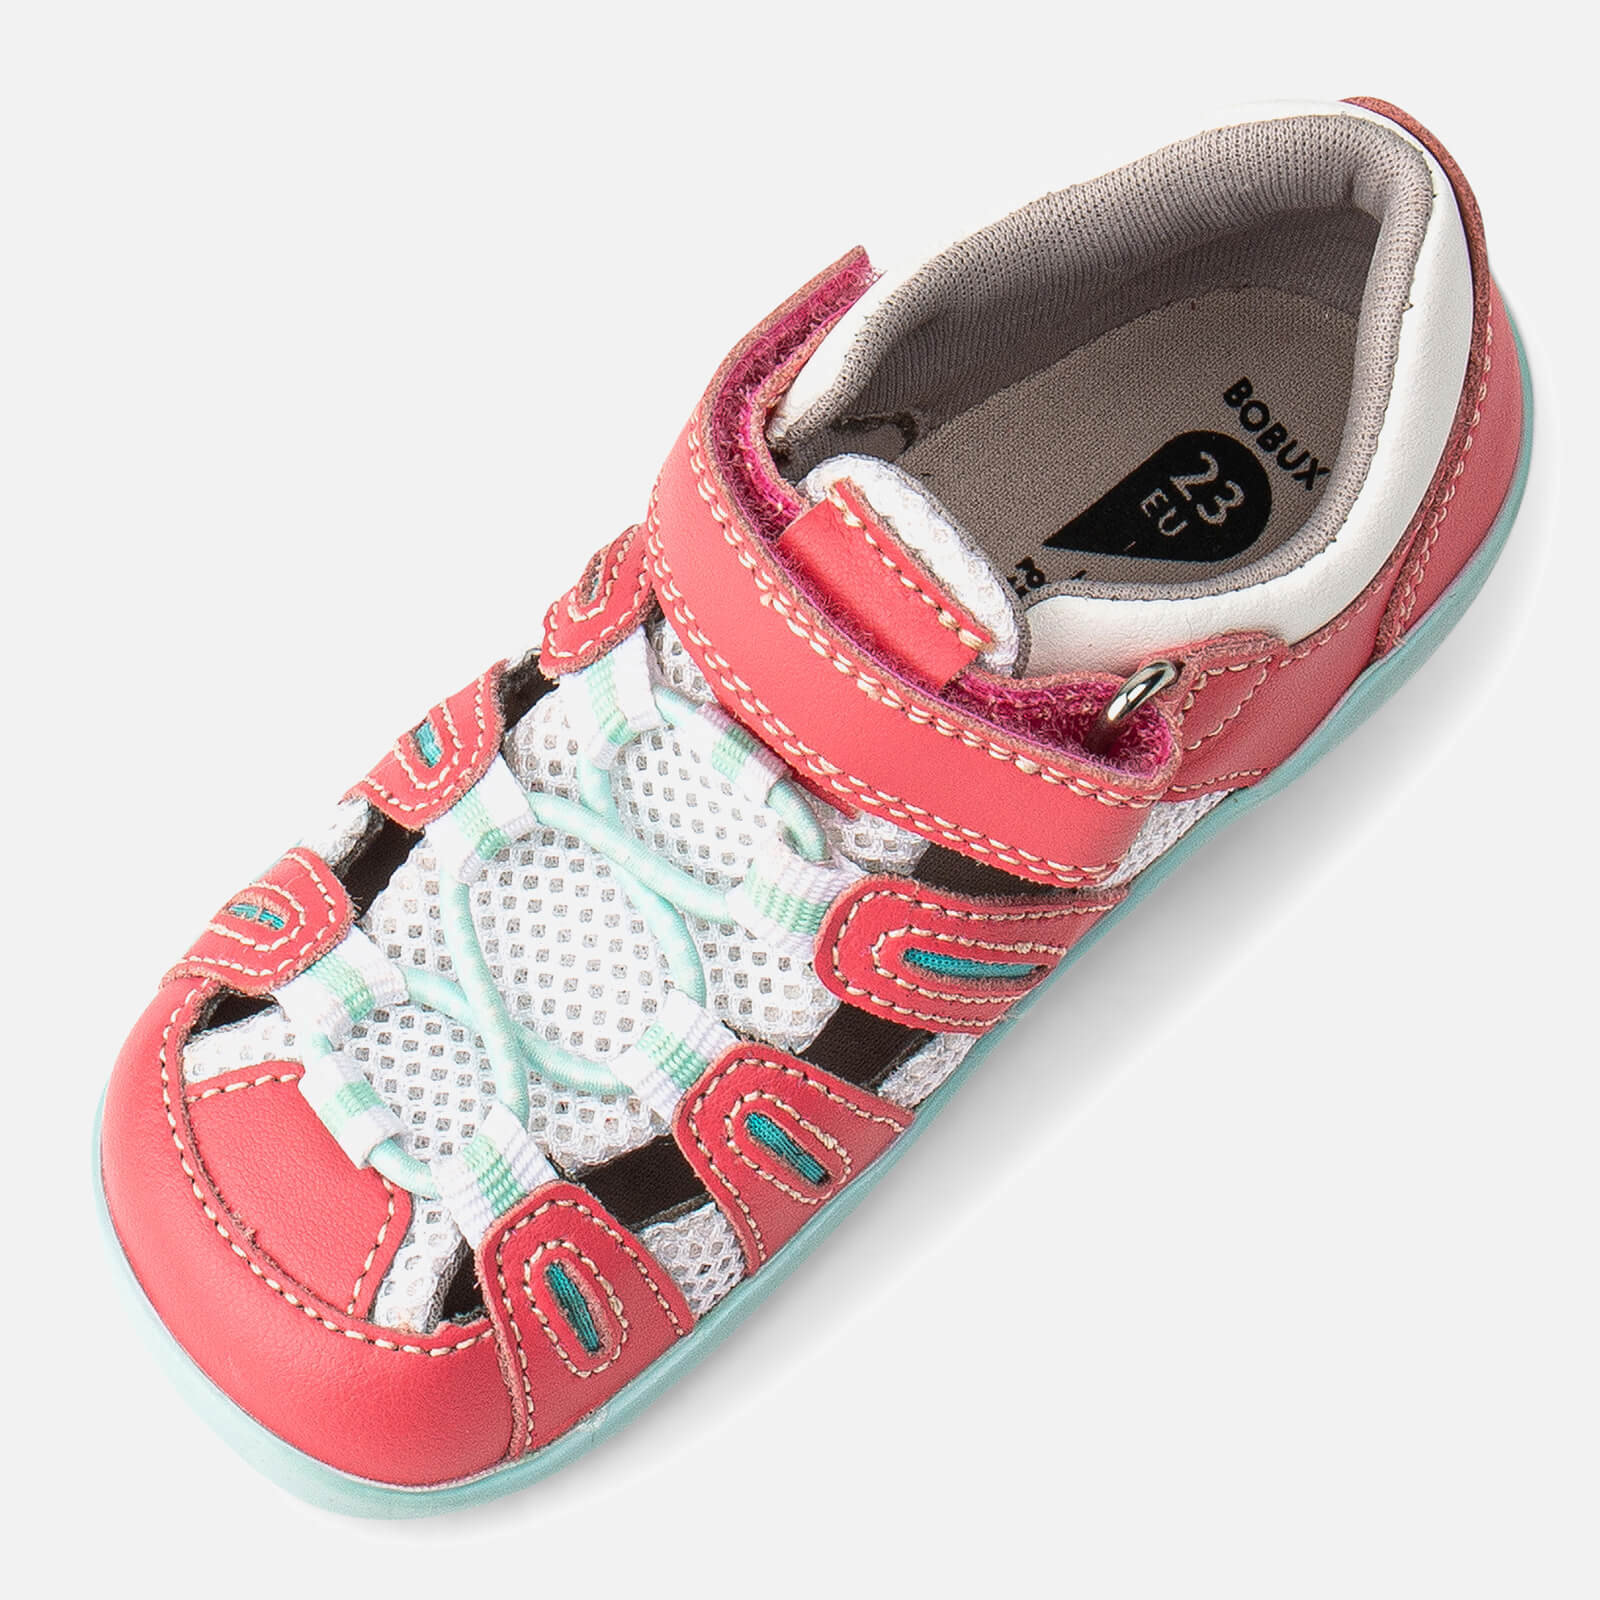 Bobux Girls' I-walk Summit Water Shoes - Guava Mint - Uk 6 Toddler 637203 Childrens Footwear, Pink